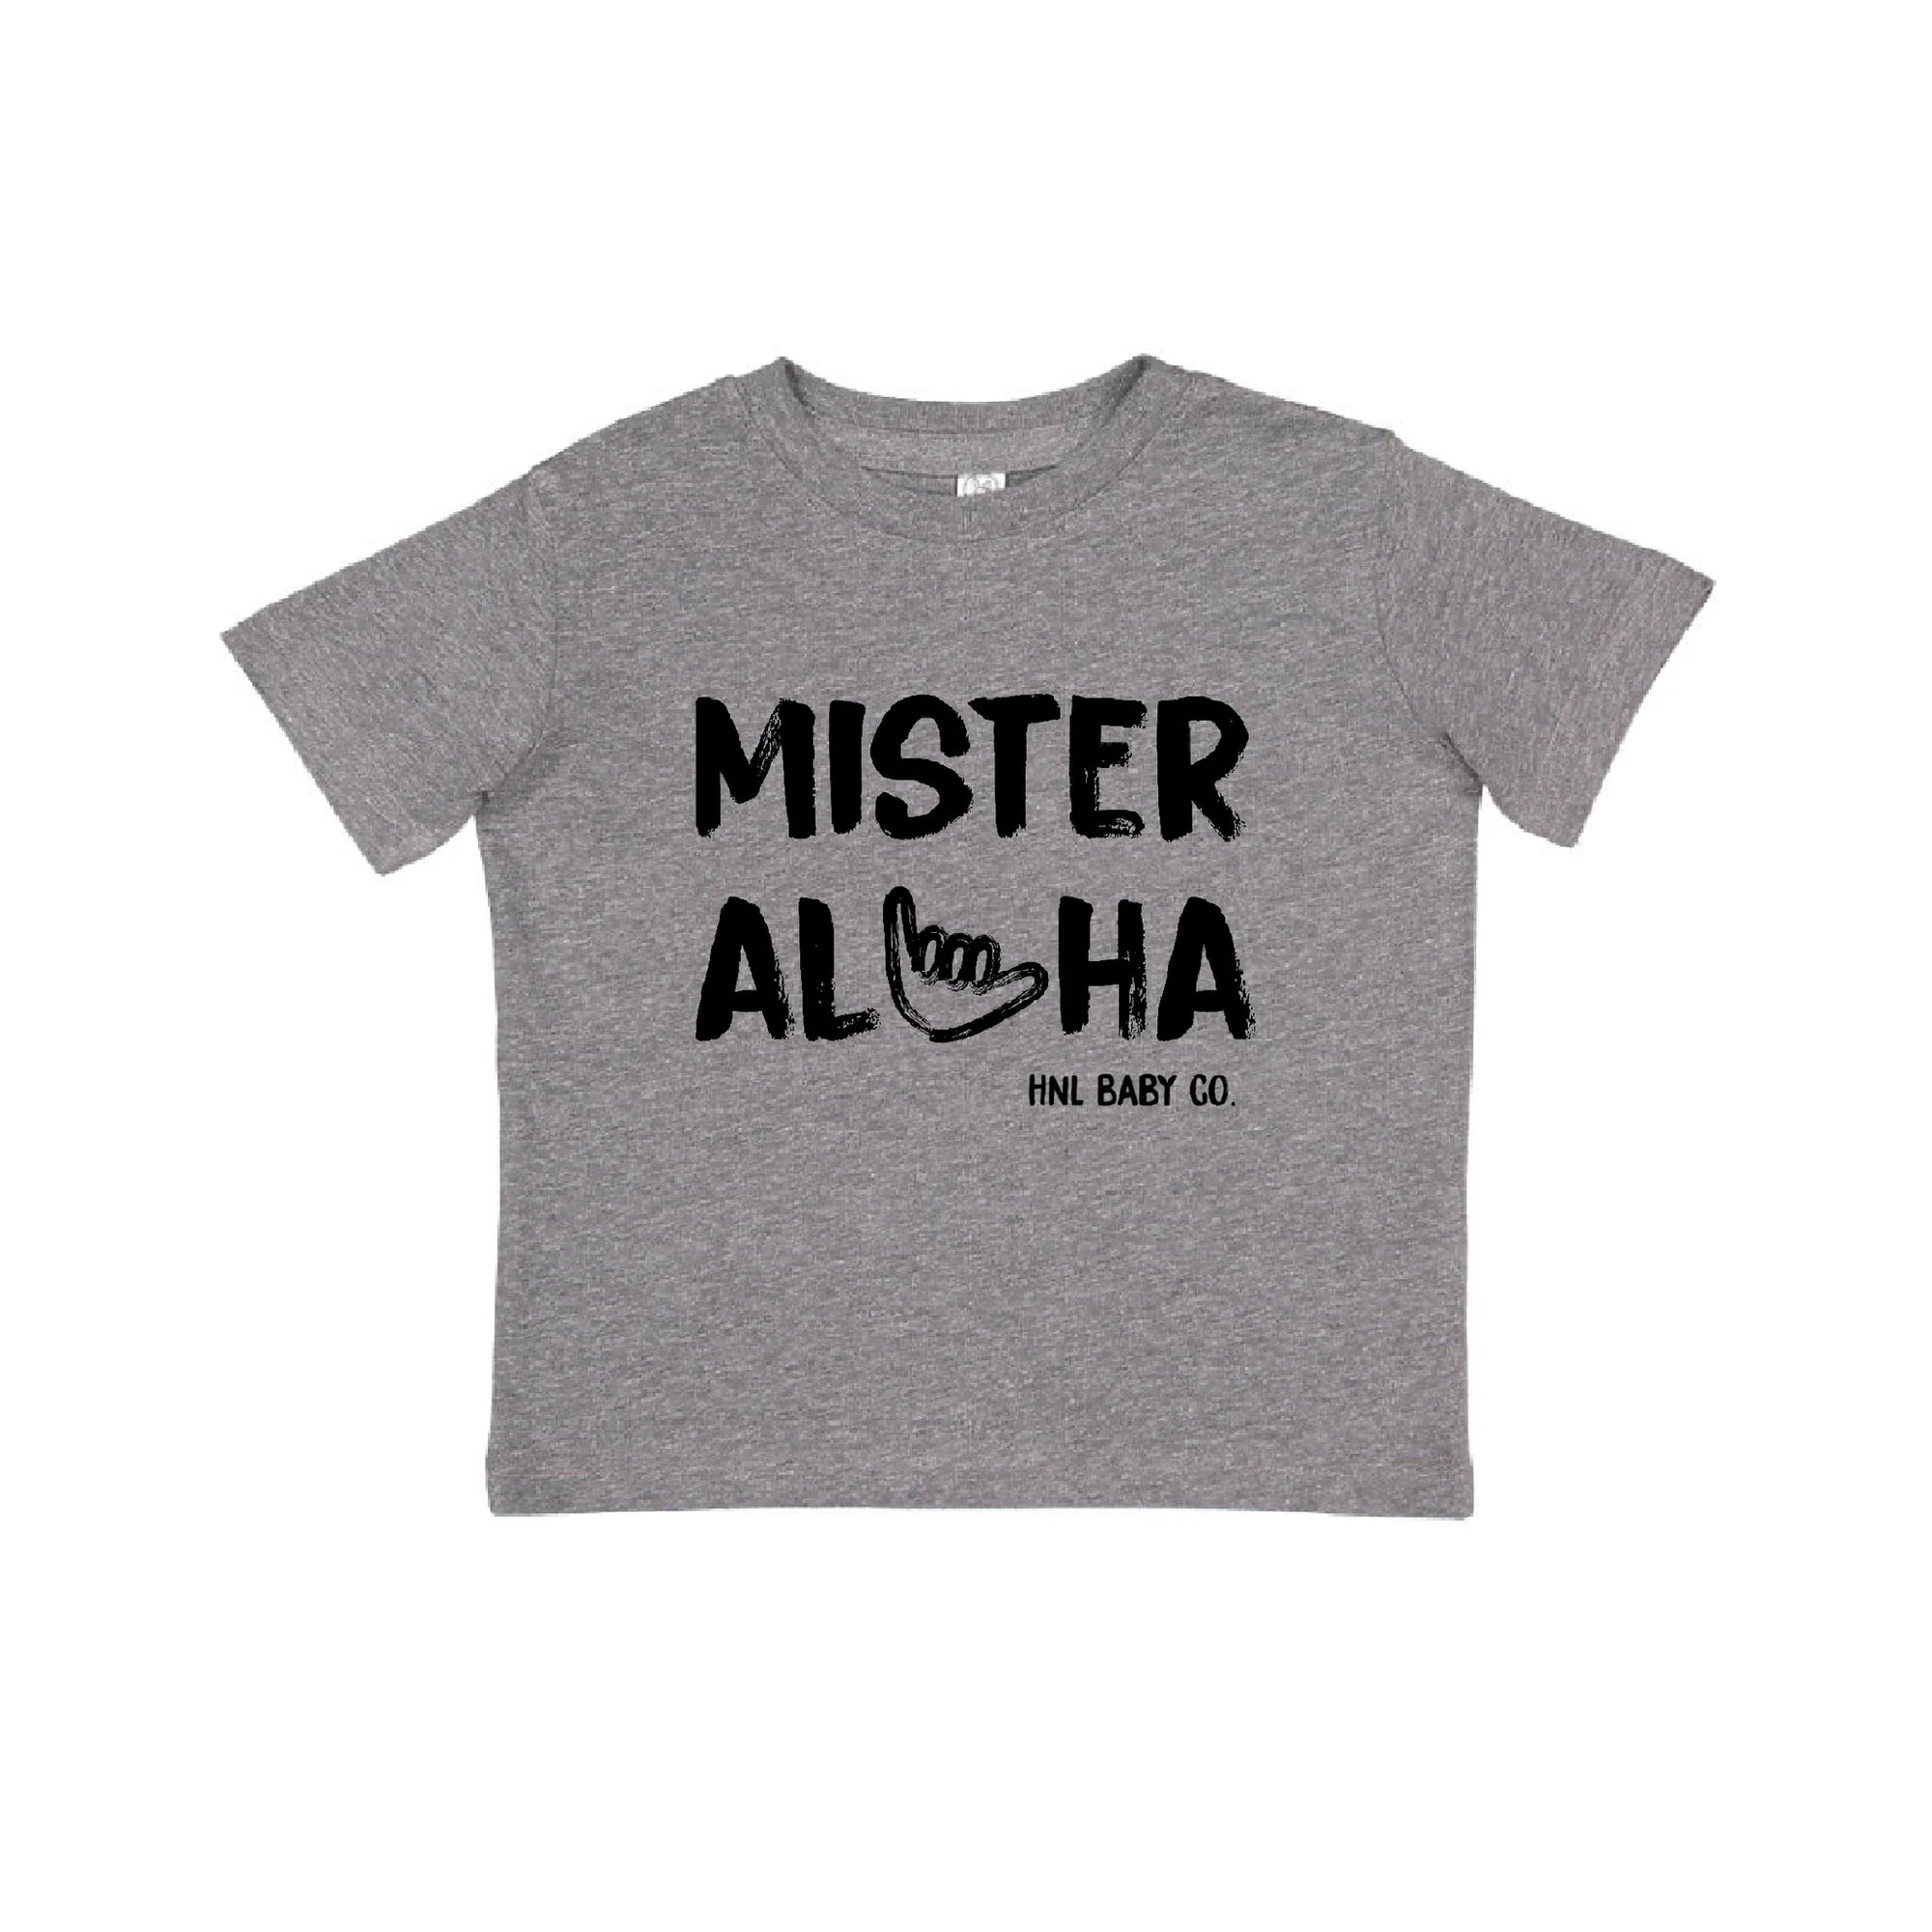 Pop-Up Mākeke - Honolulu Baby Co. - Mister Aloha Keiki T-Shirt - Granite Heather - Front View